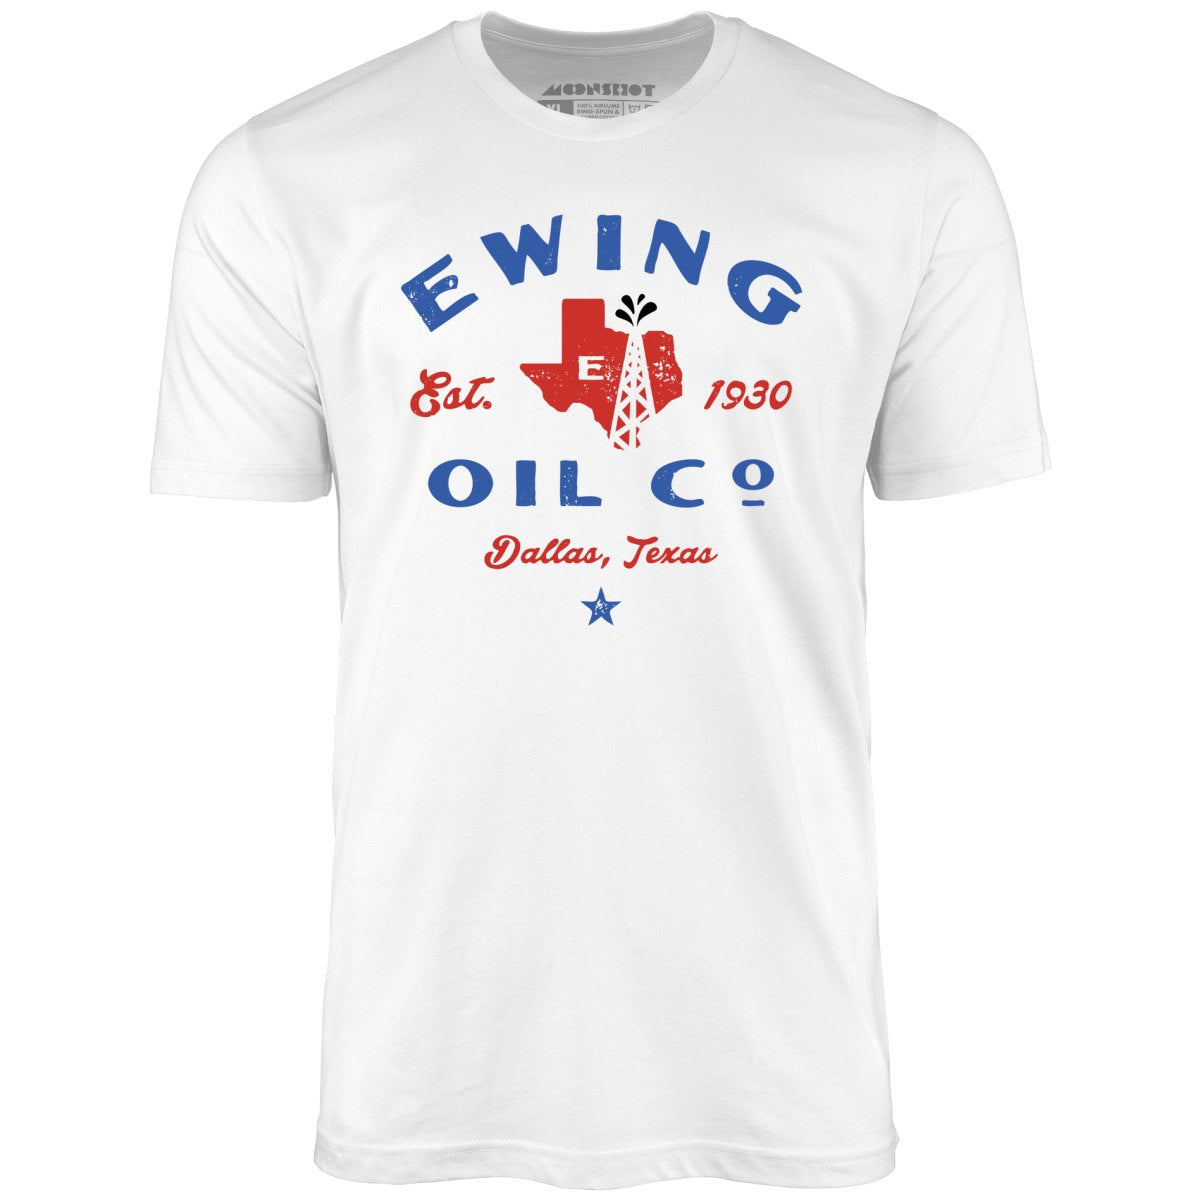 Ewing Oil Co - Dallas, Texas - Unisex T-Shirt